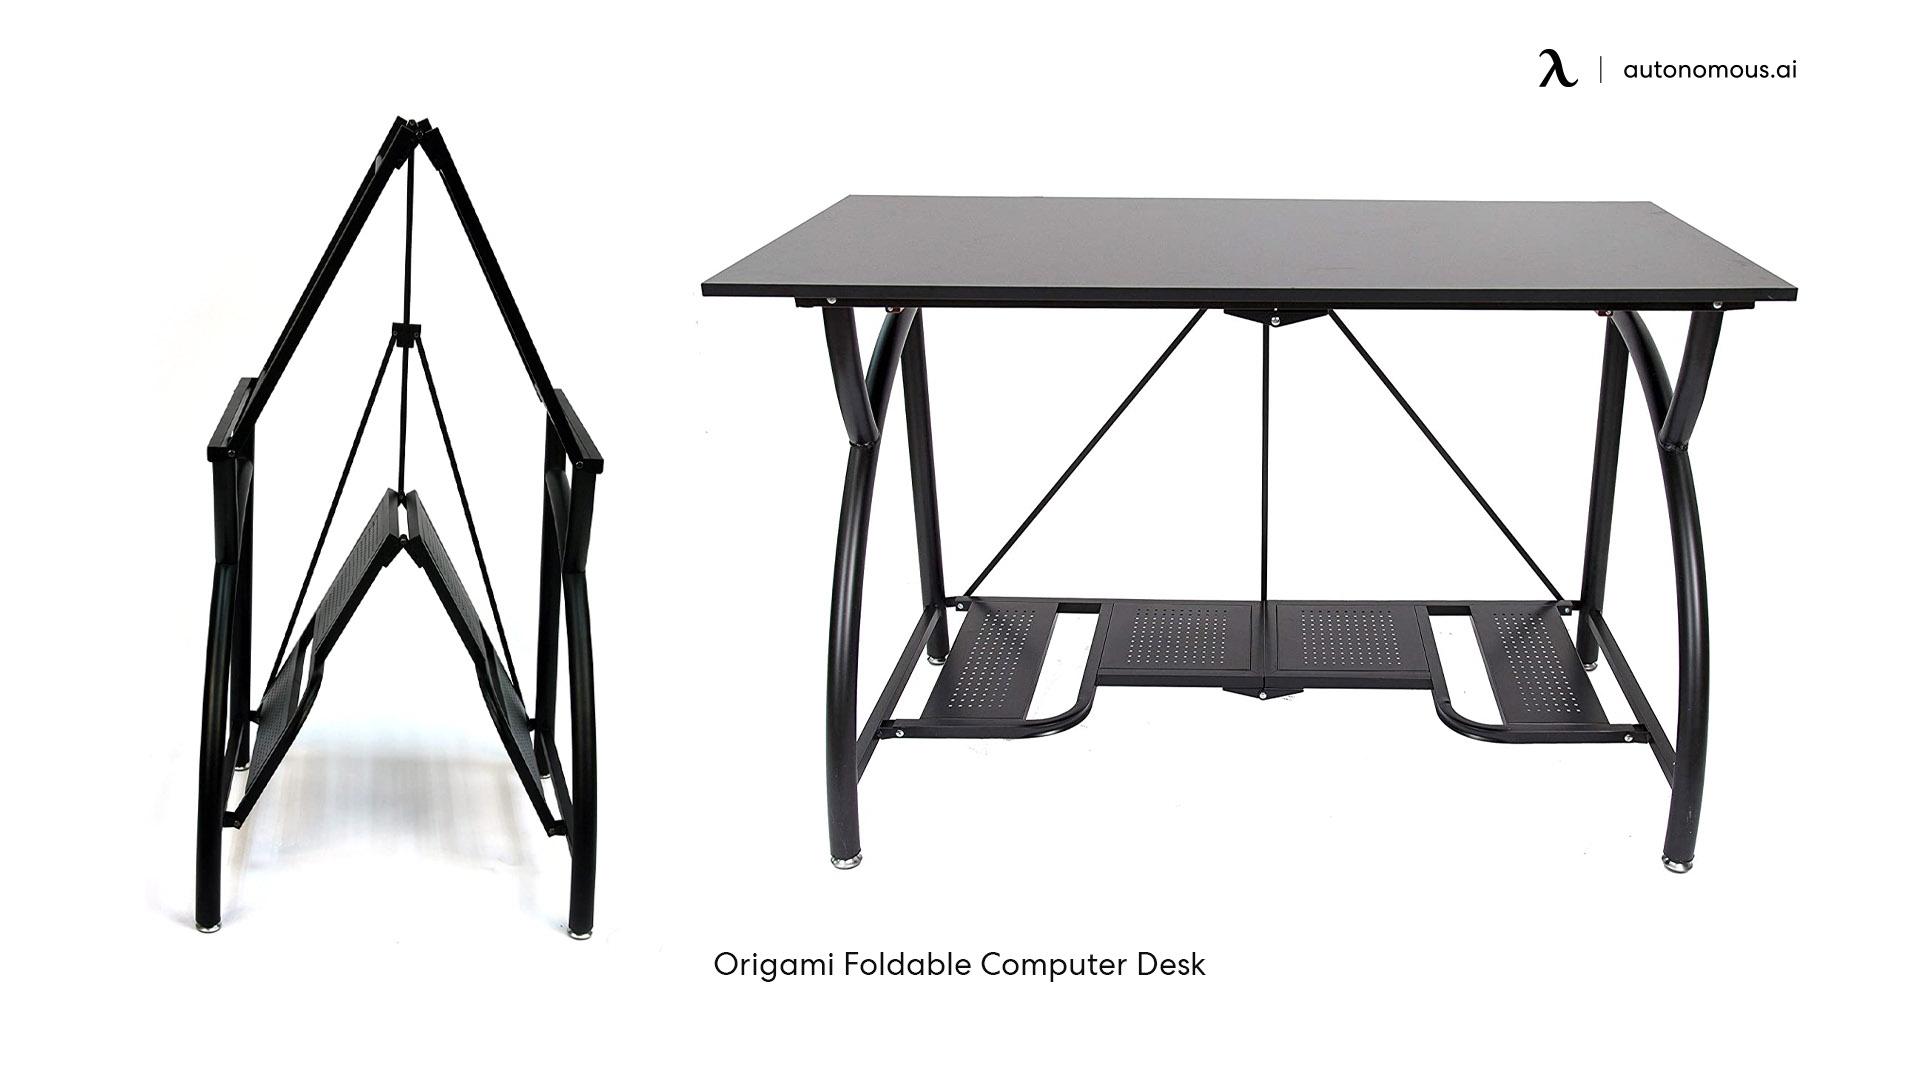 Origami Foldable Computer Desk